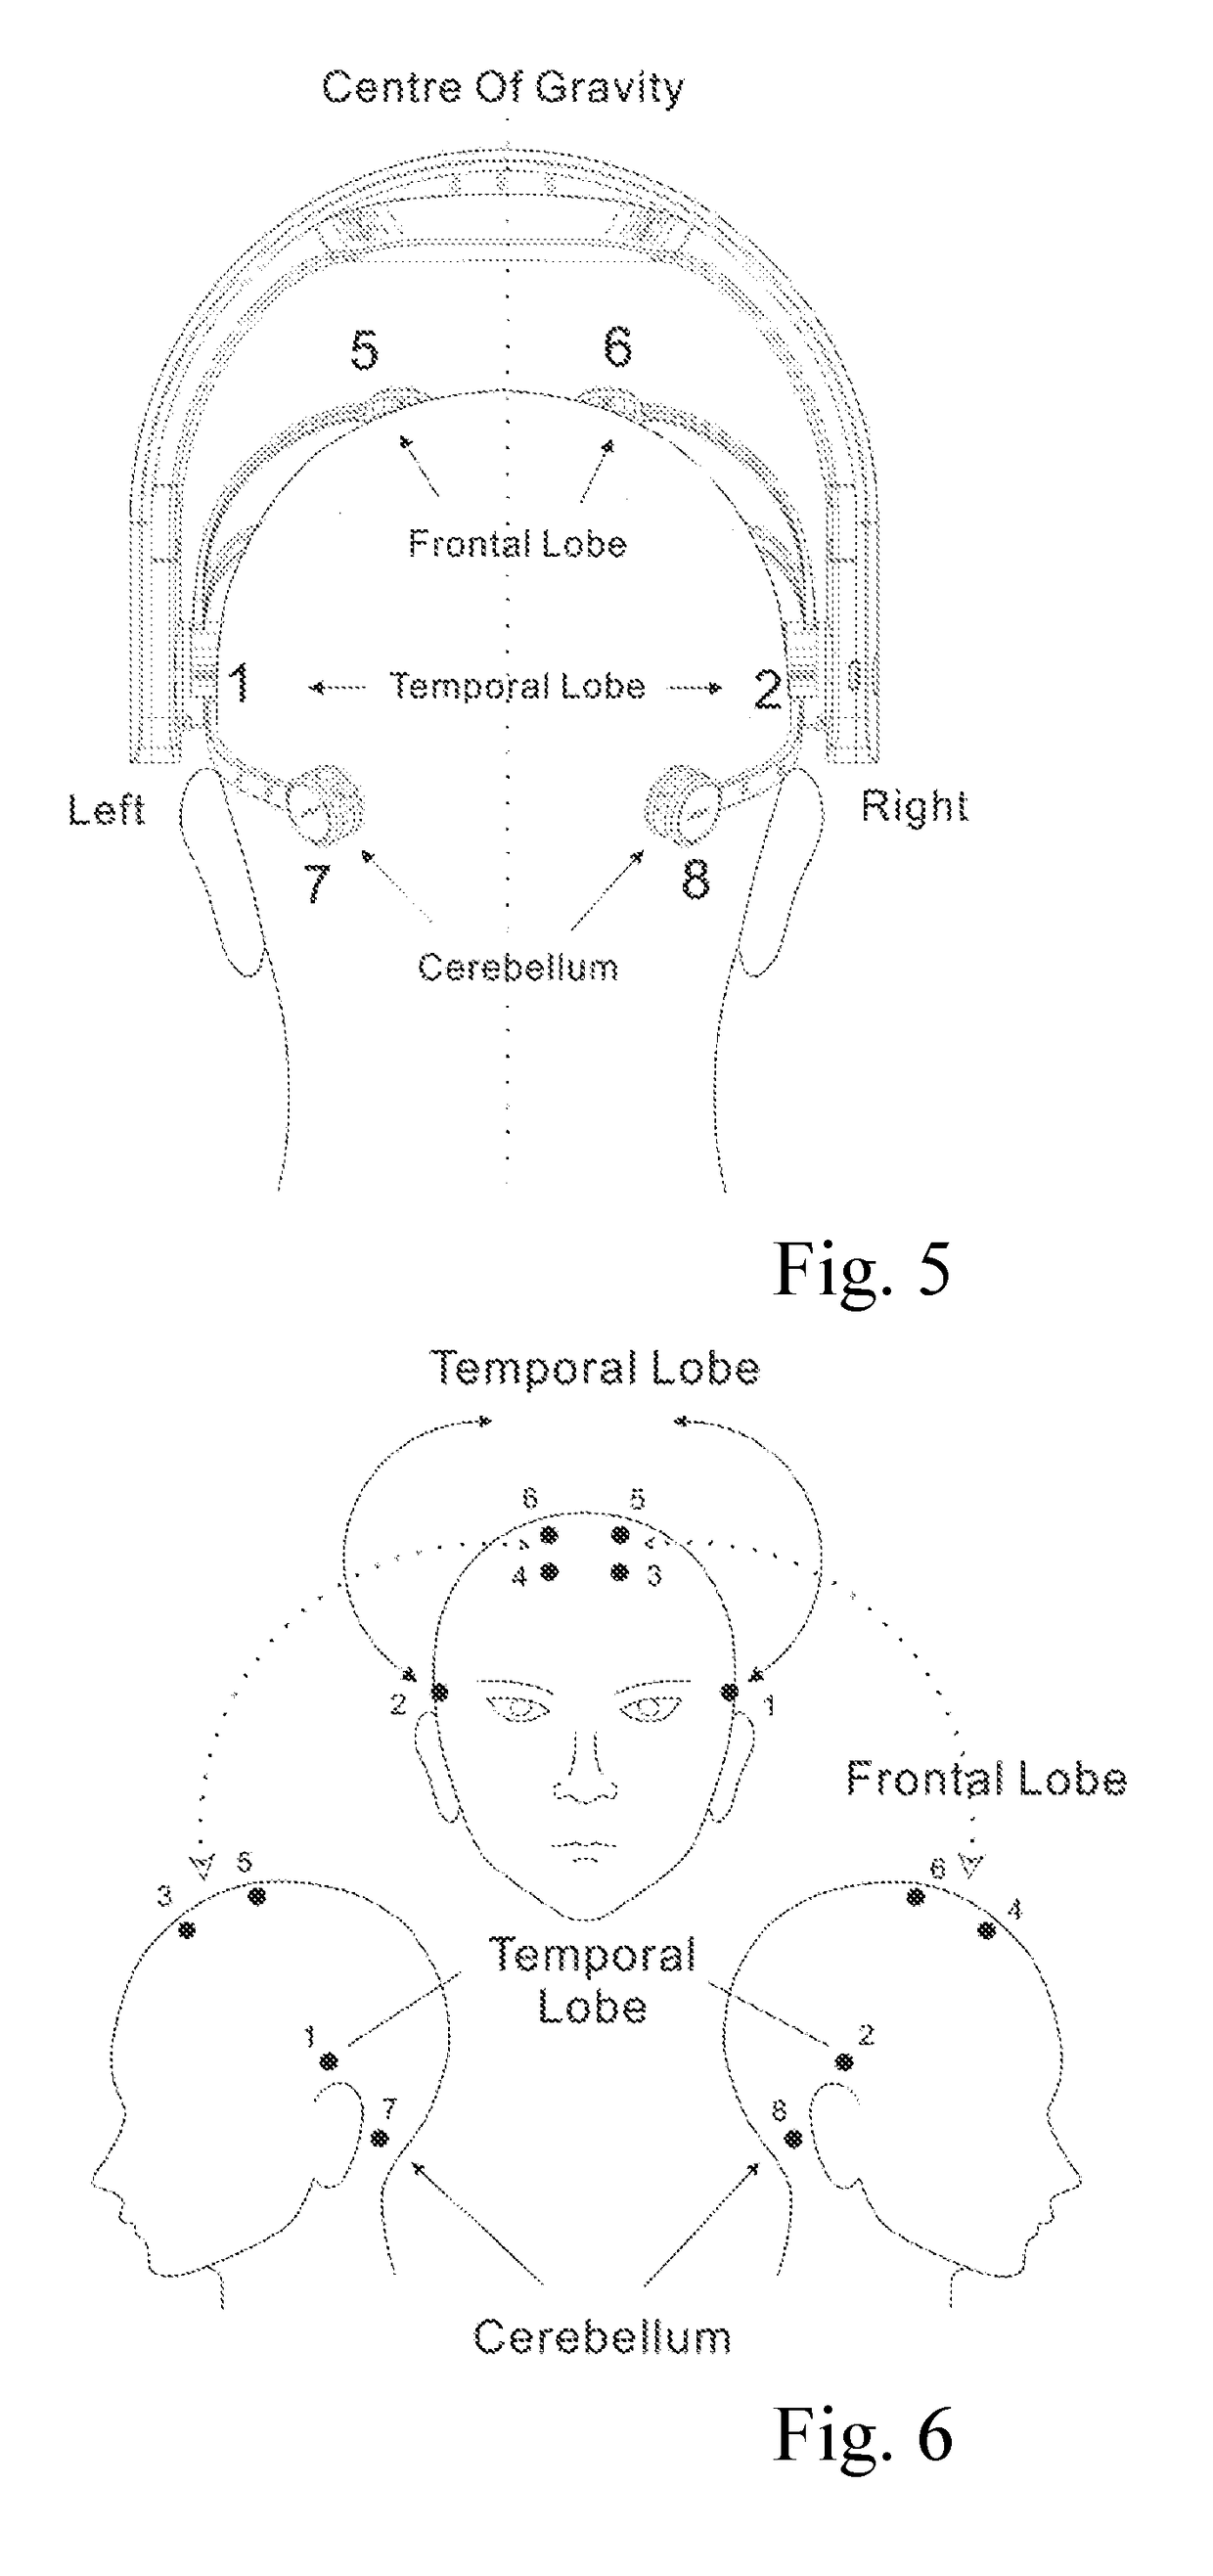 Portable Composite Waveform Transcranial Electrical Stimulation System